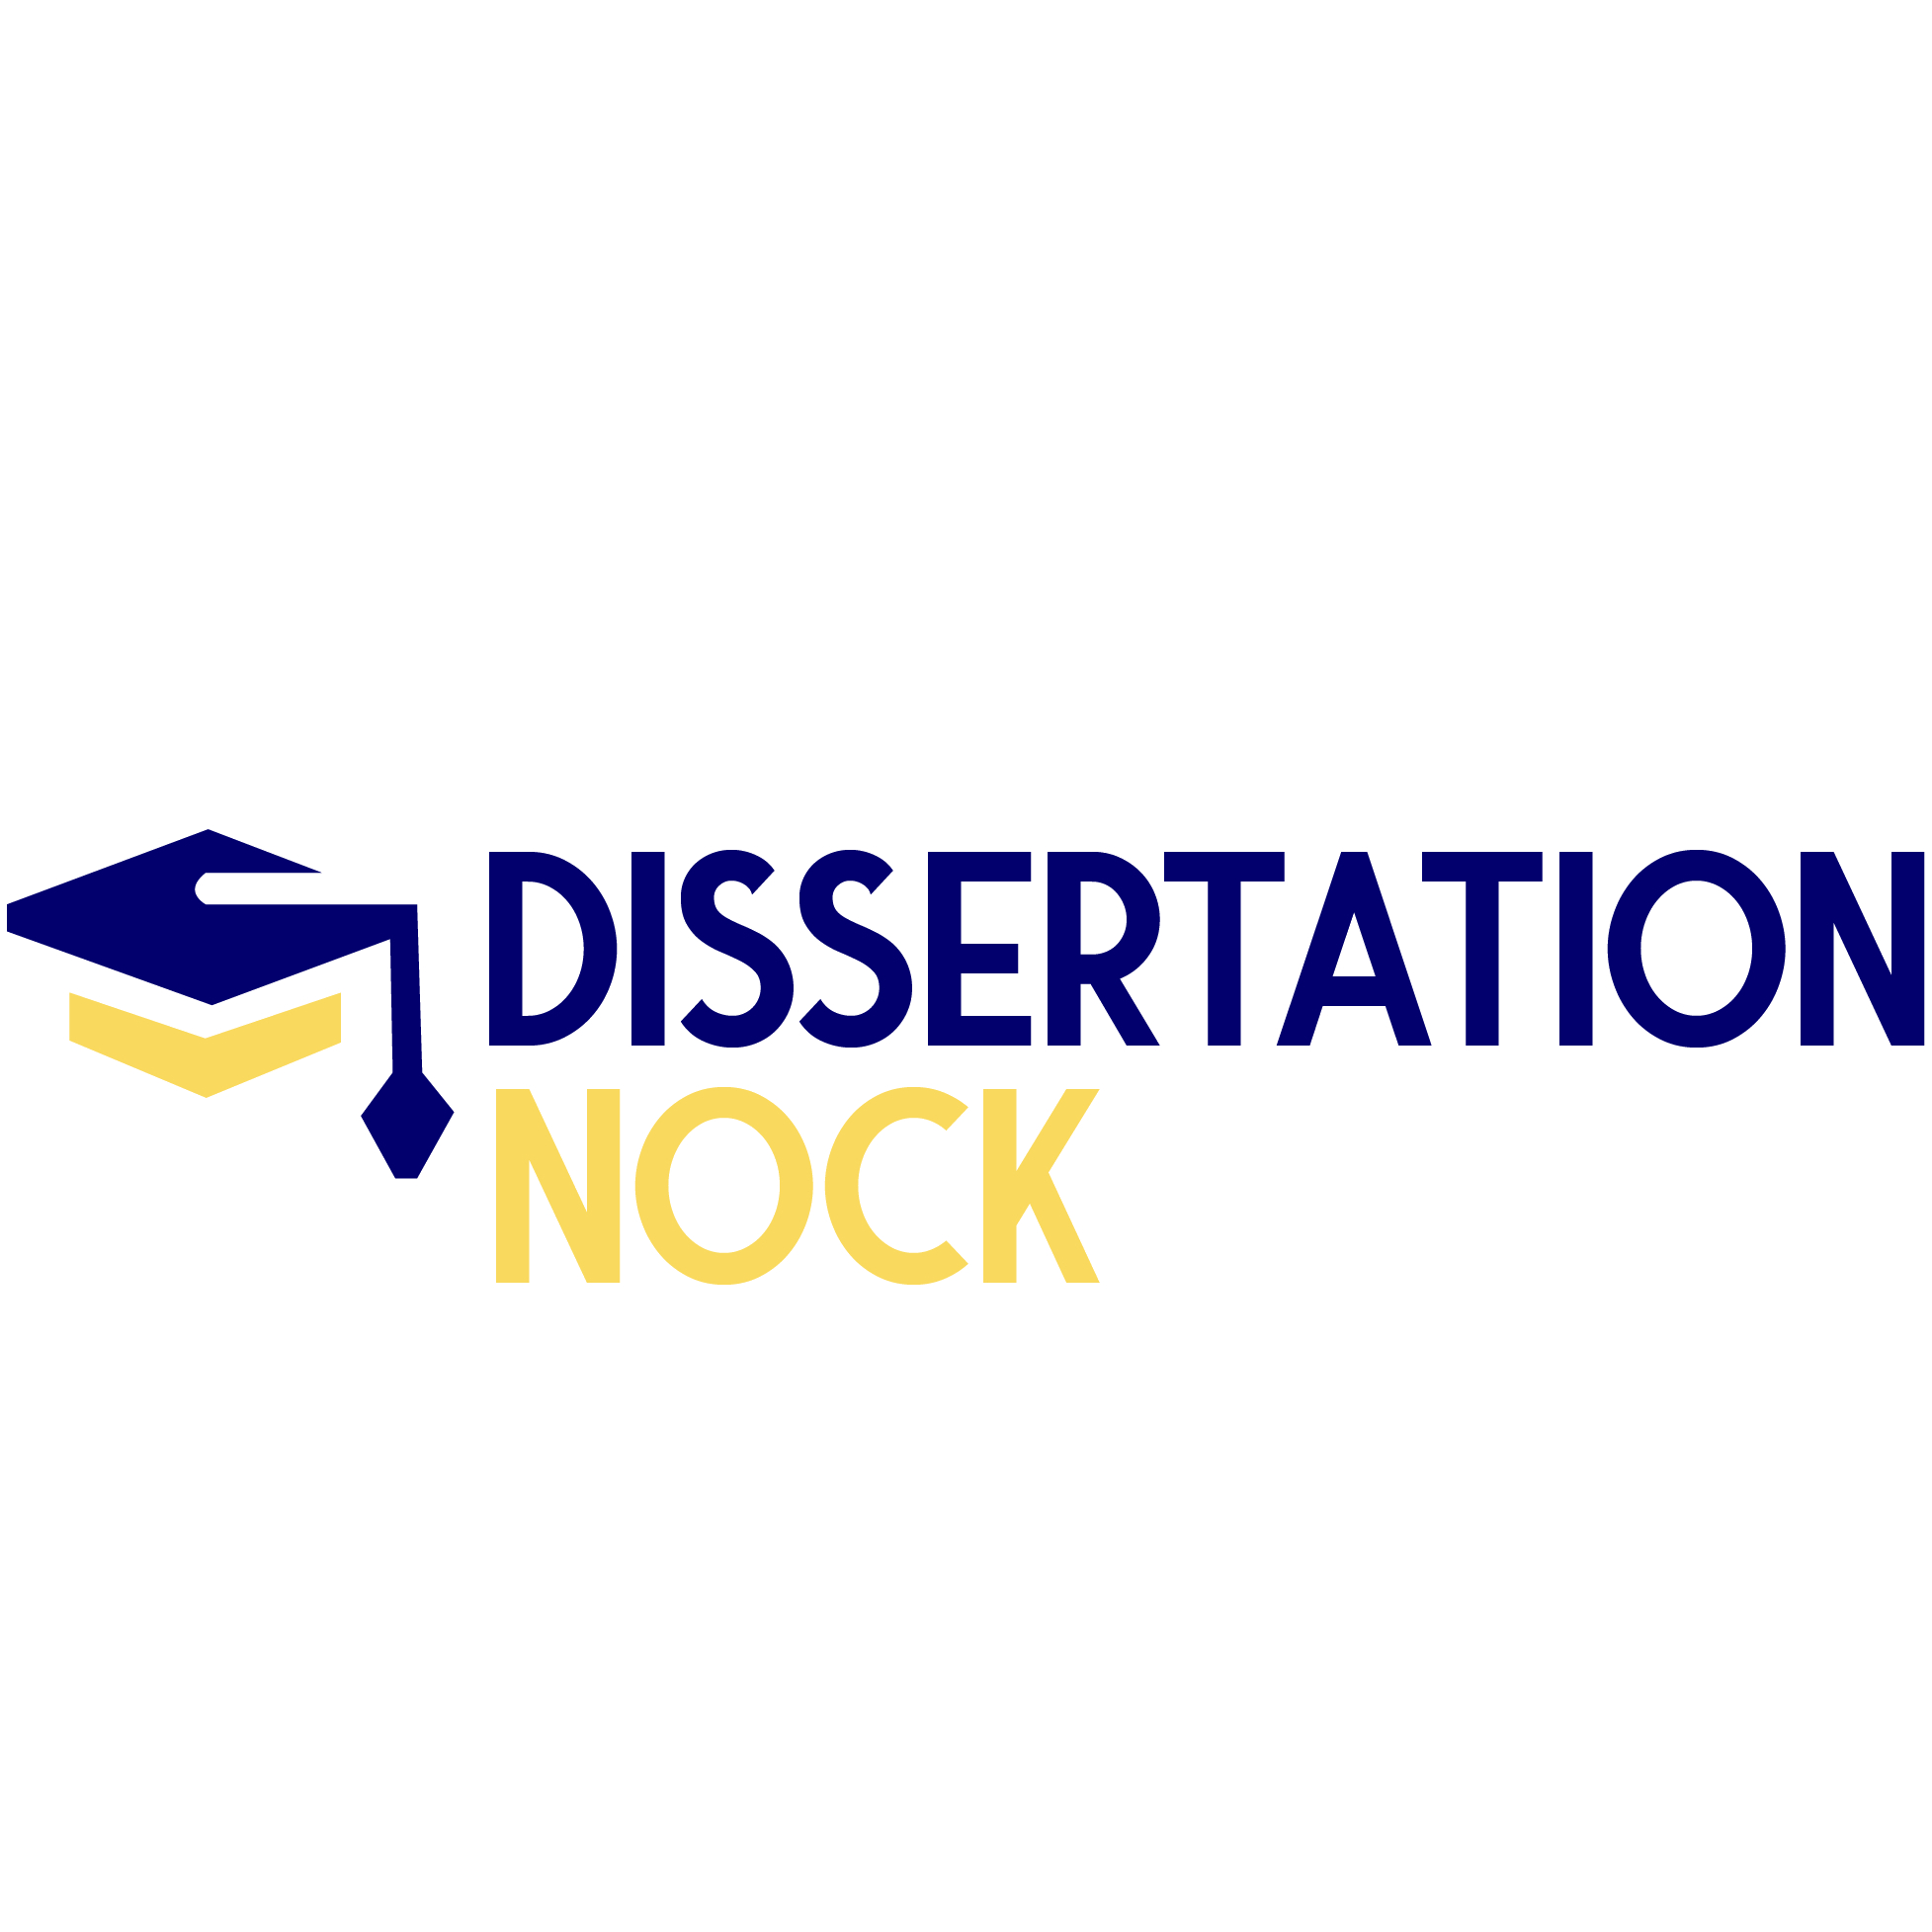 Dissertation Nock